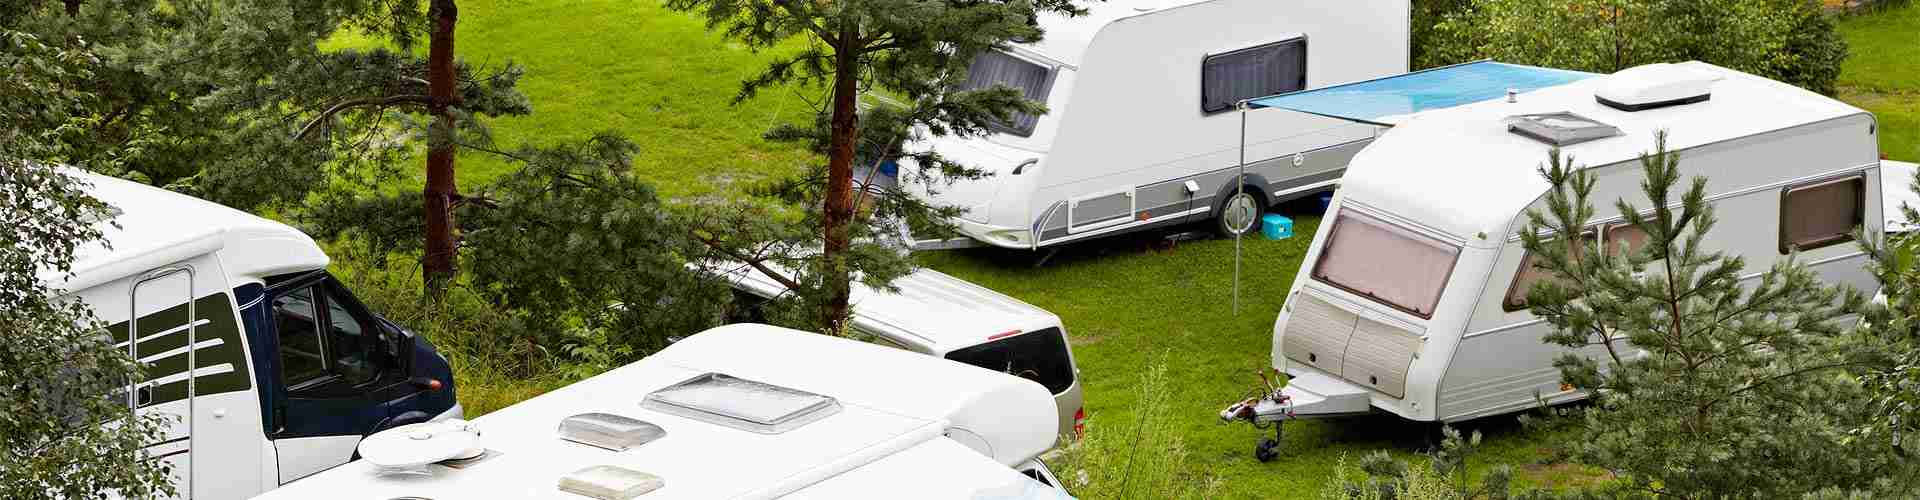 Campings y bungalows en A Pobra do Caramiñal
           
           


          
          
          


